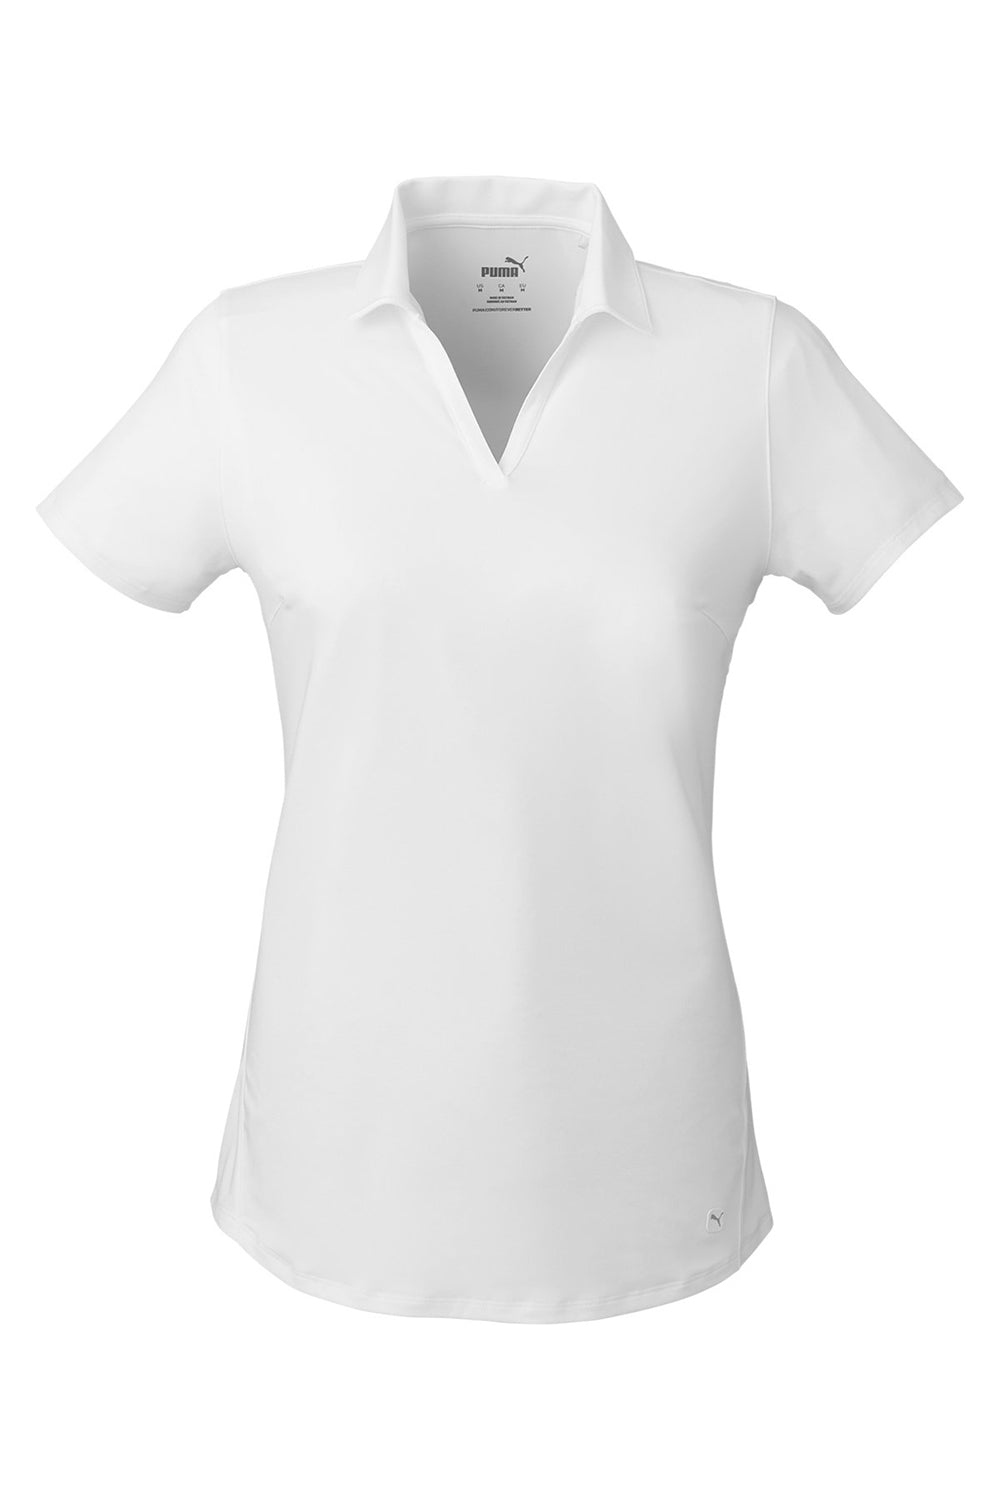 Puma 597695 Womens Cloudspun Free Short Sleeve Polo Shirt Bright White Flat Front